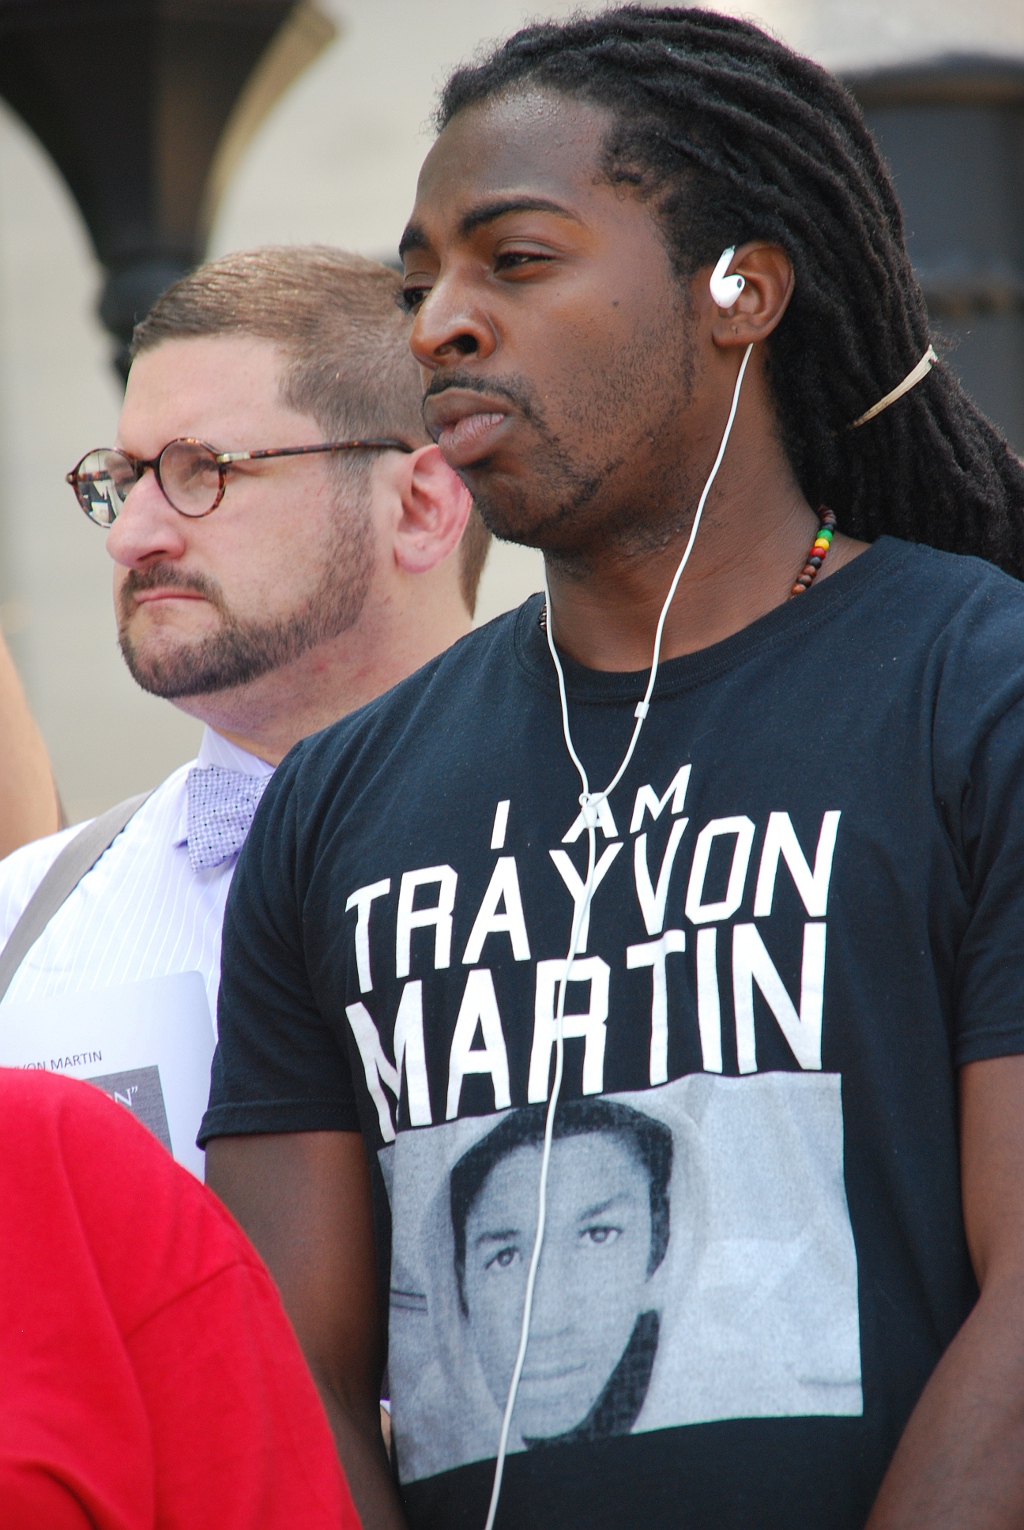 A Trayvon Martin shirt. 